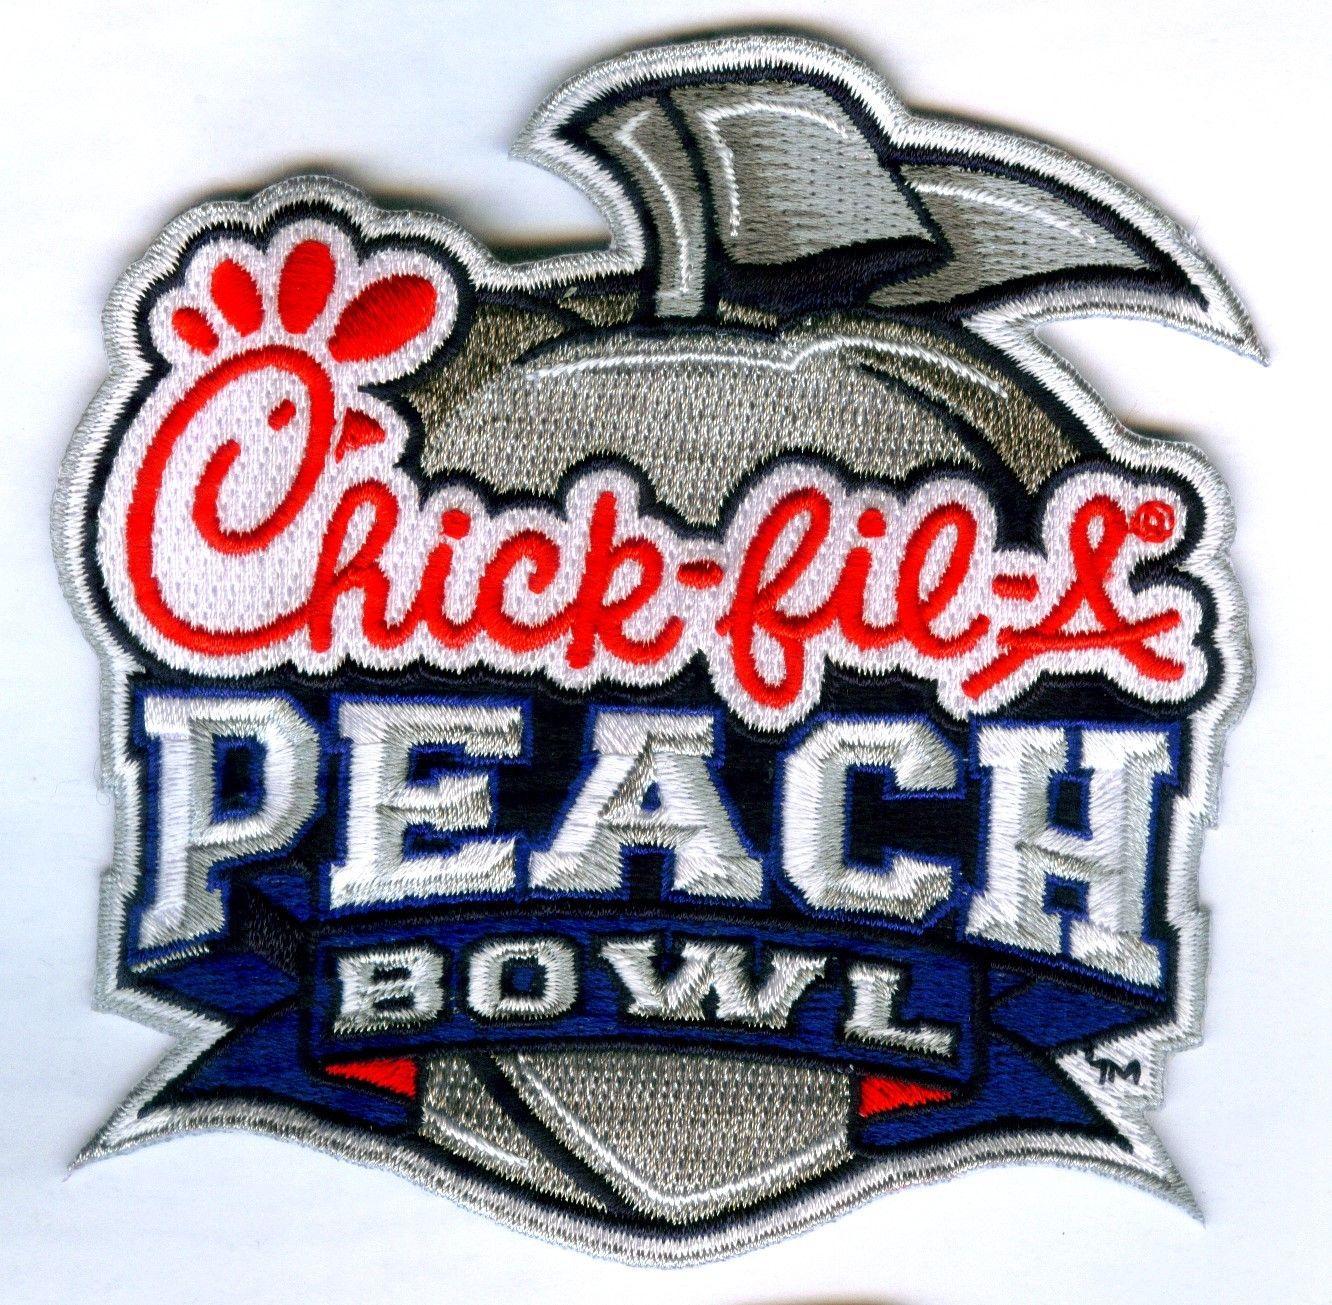 Peach Bowl Logo - Chick-fil-A Peach Bowl Patch